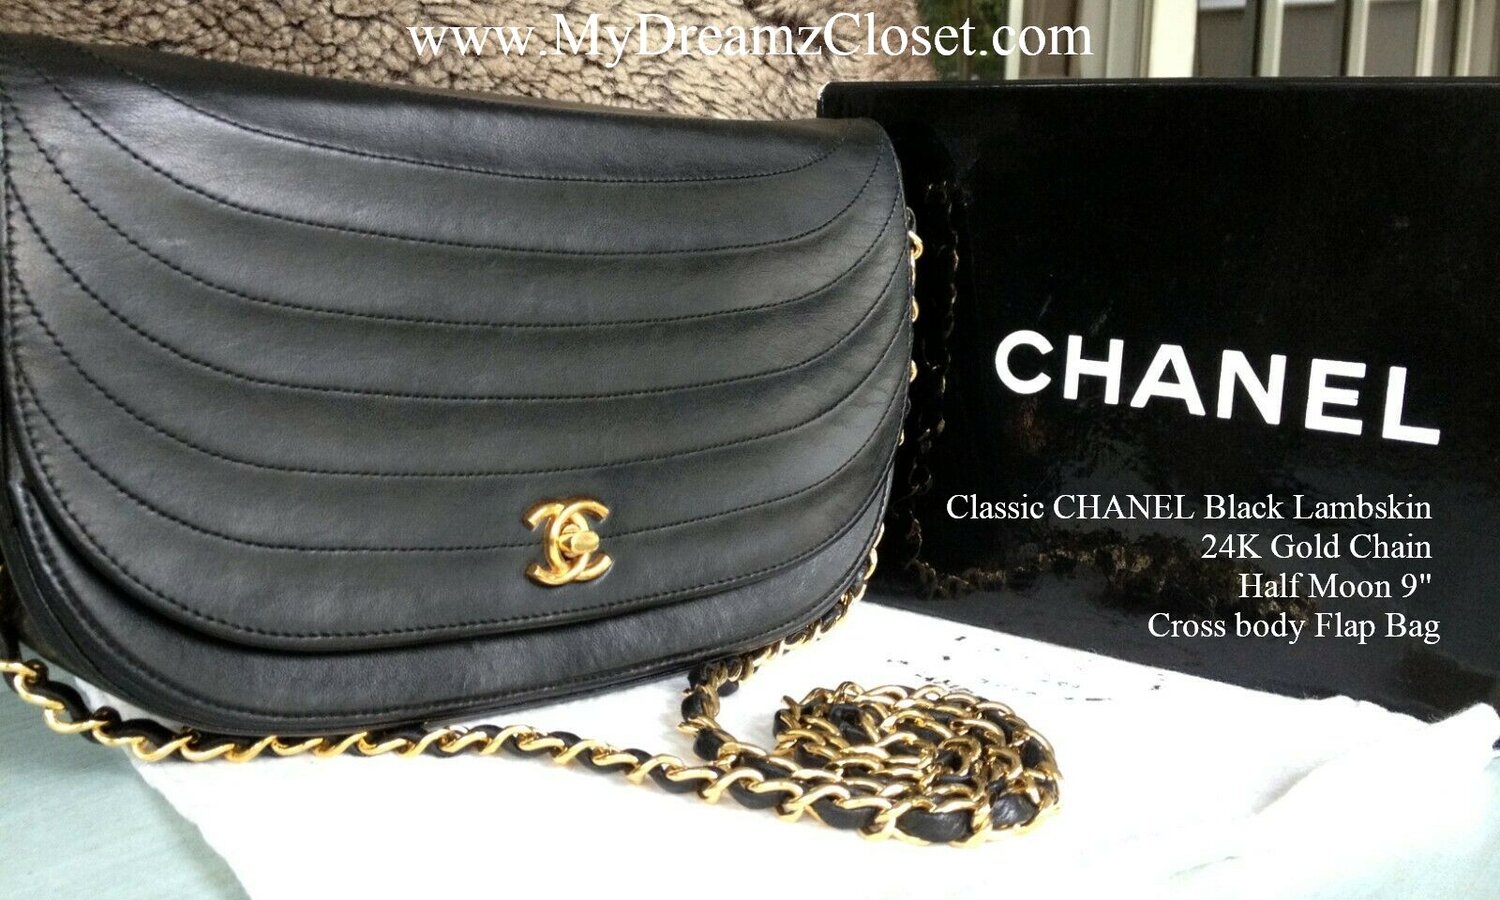 Chanel black lambskin clutch halfmoon